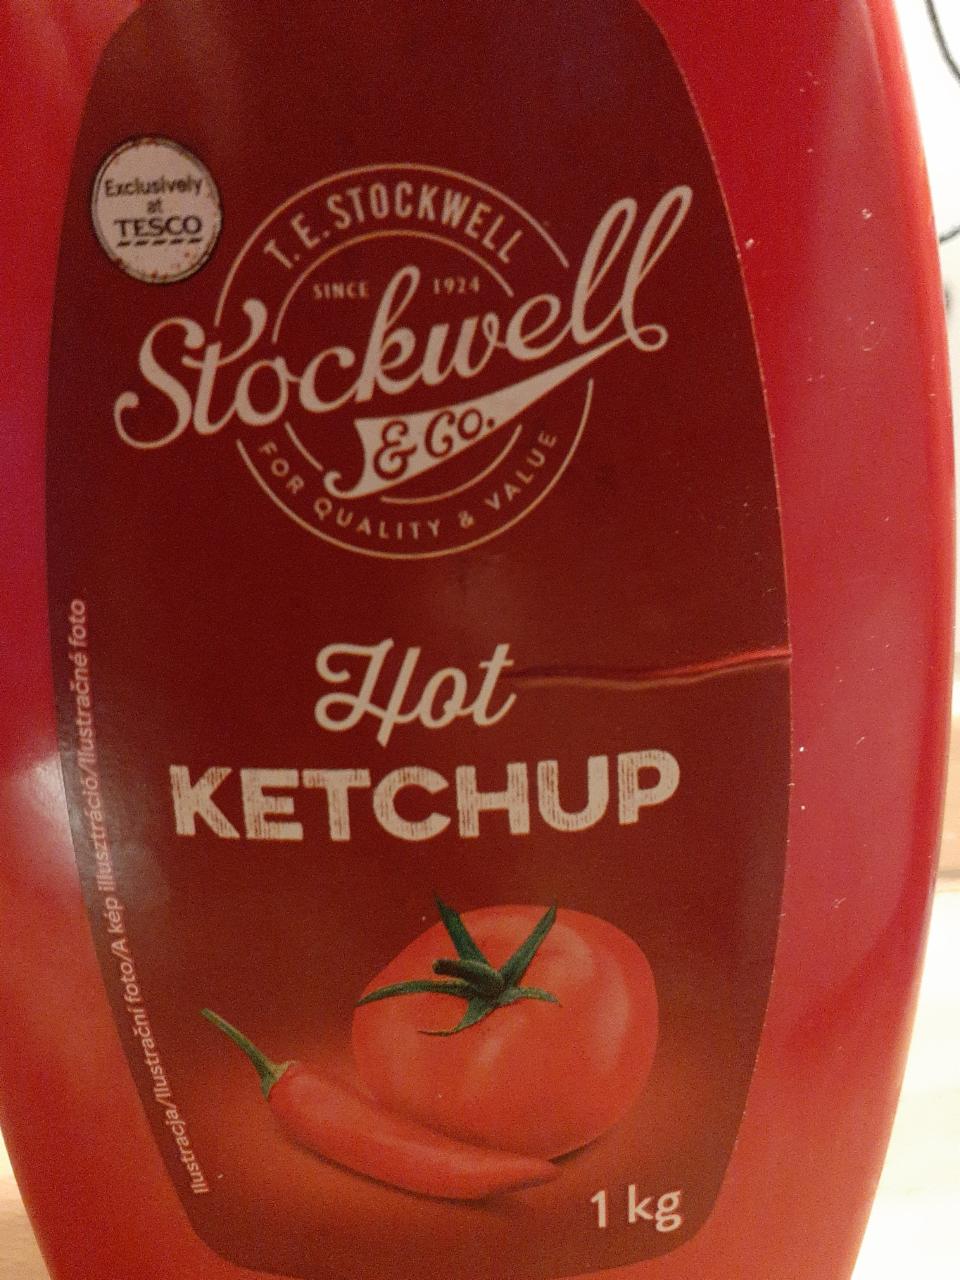 Zdjęcia - Hot Ketchup Stockwell & Co.